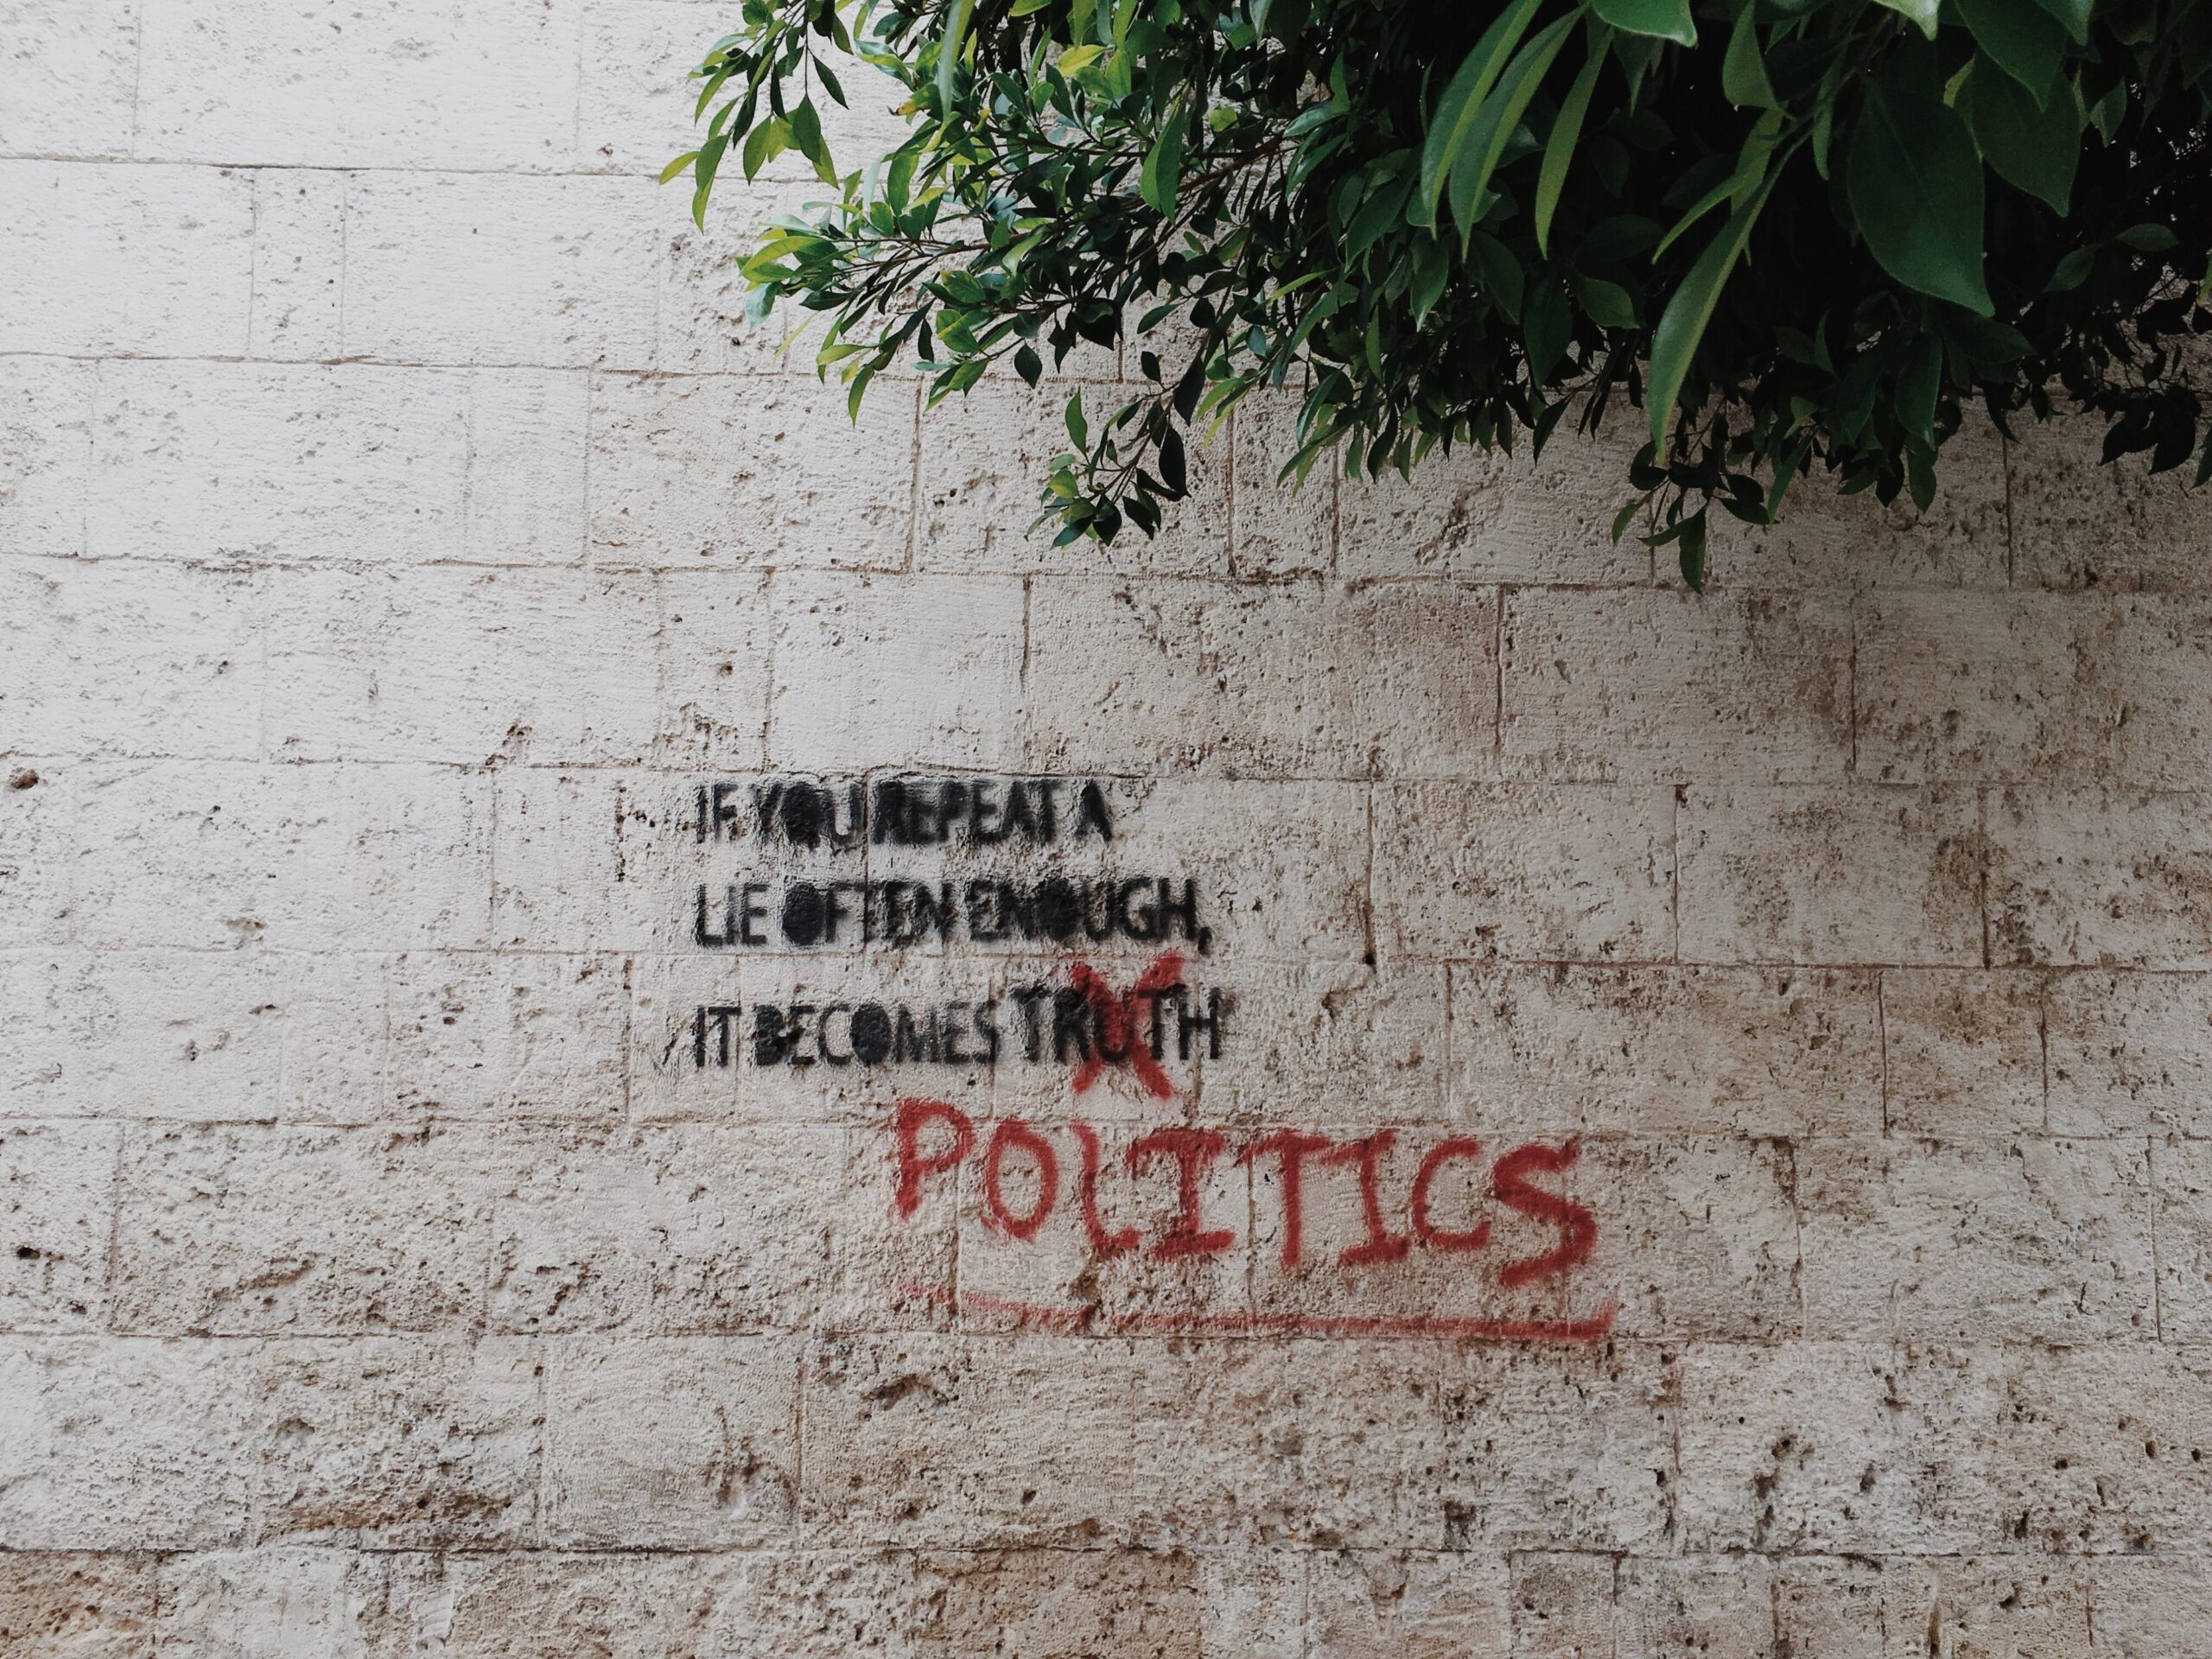 Political graffiti on wall in Lebanon